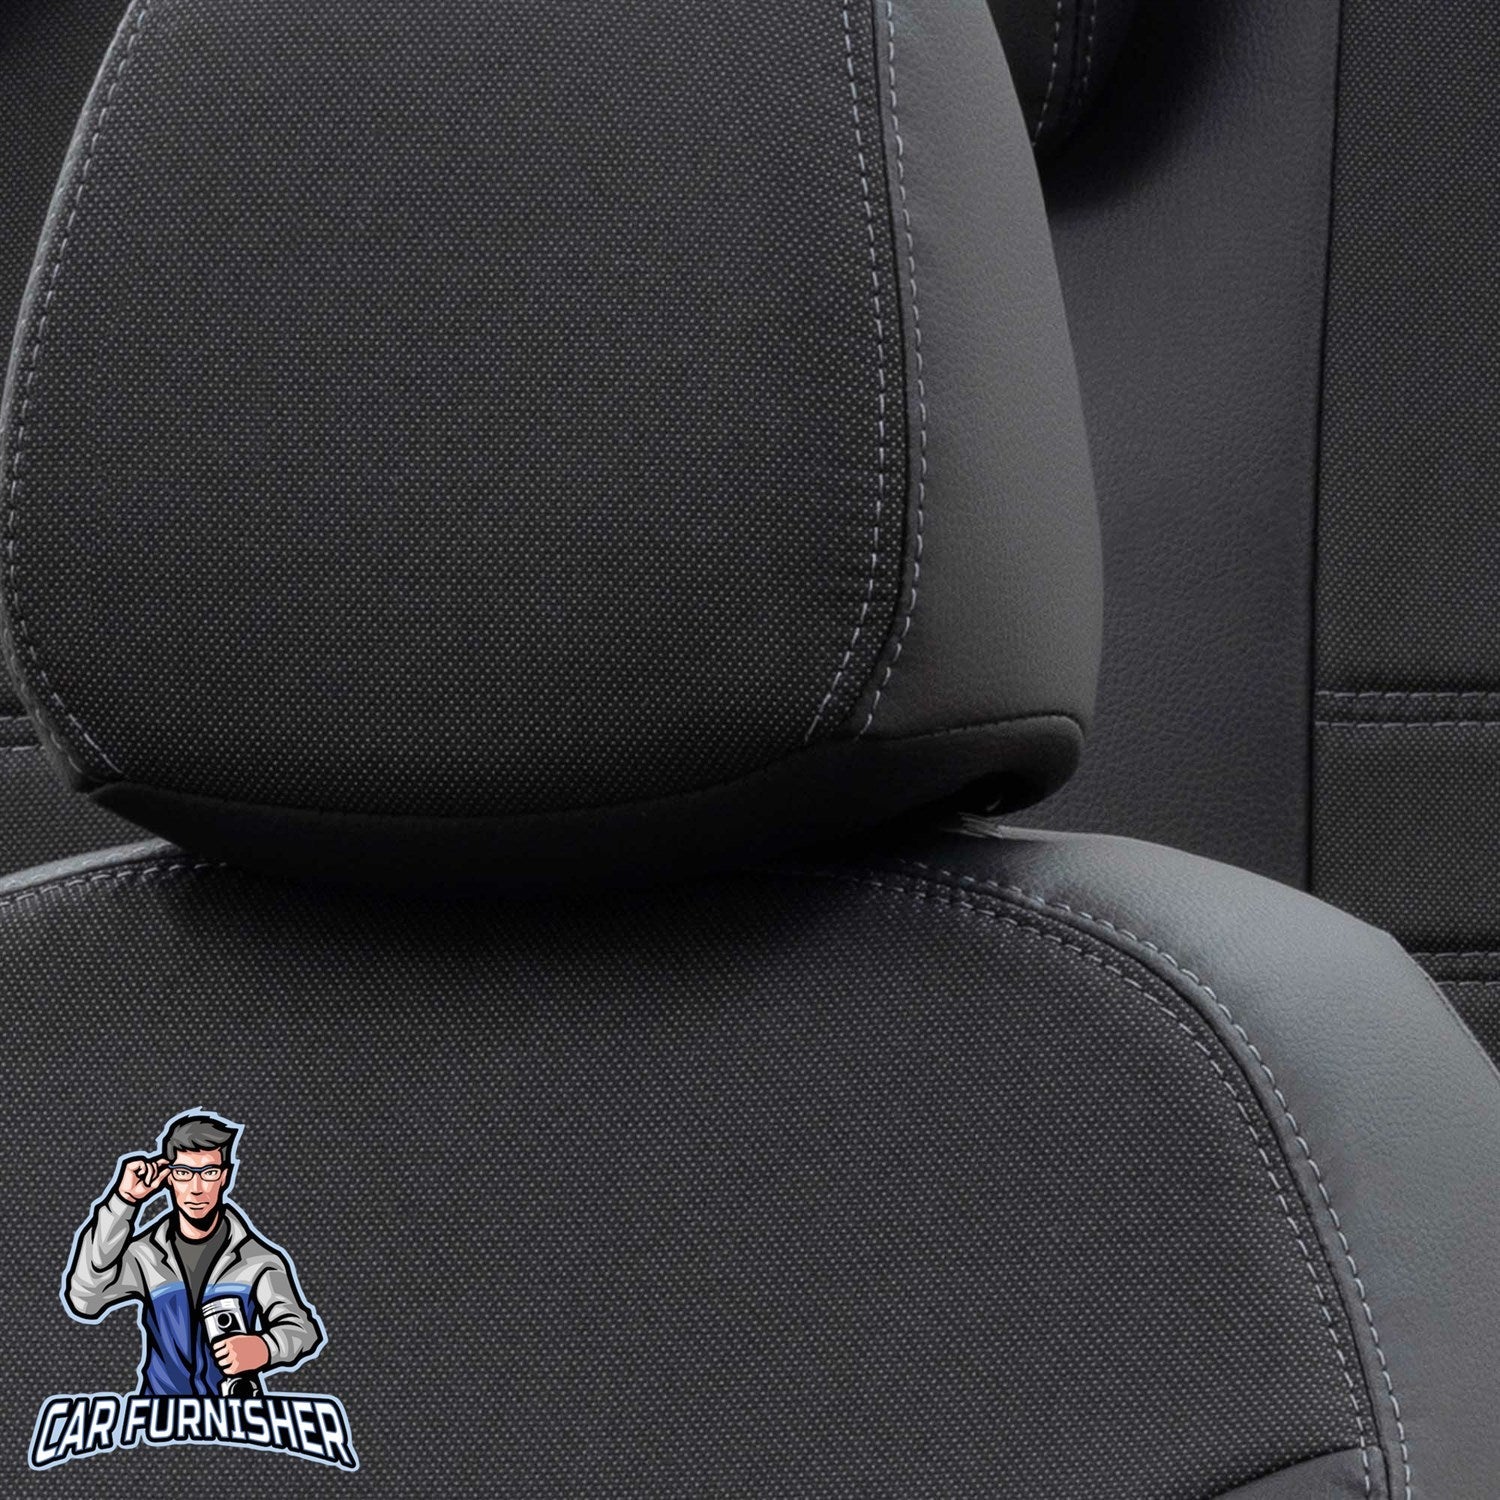 Volkswagen Jetta Seat Cover Paris Leather & Jacquard Design Black Leather & Jacquard Fabric